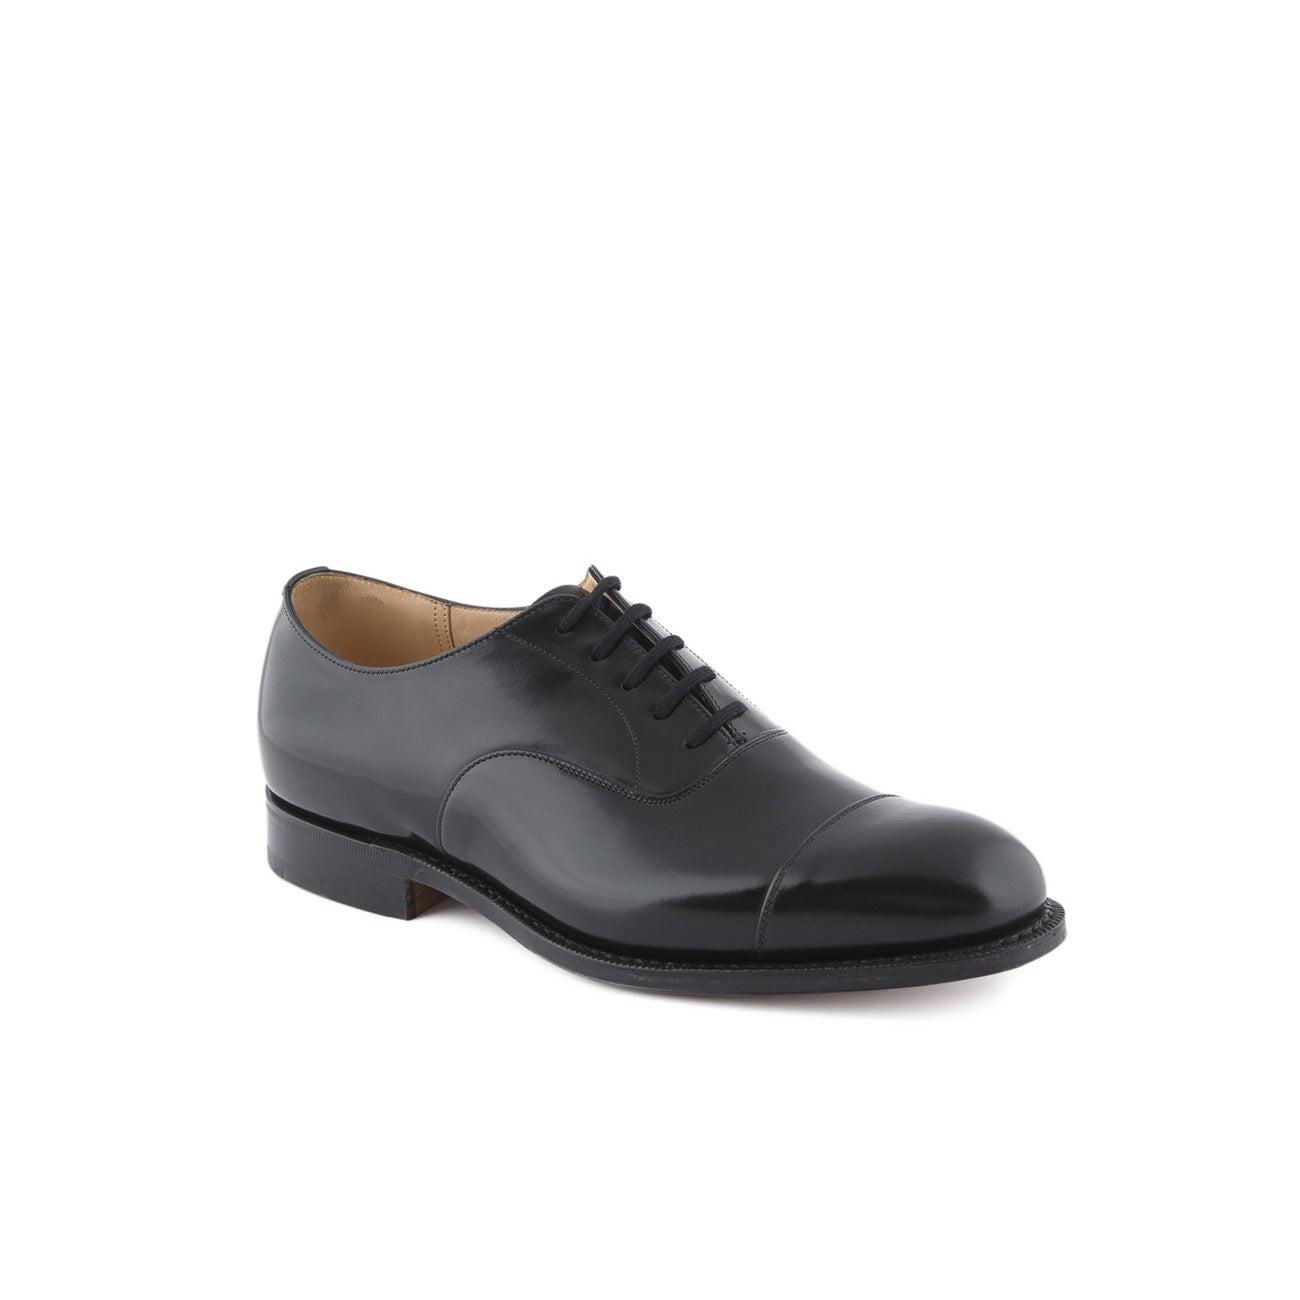 Church's Consul 173 black polishbinder oxford shoe